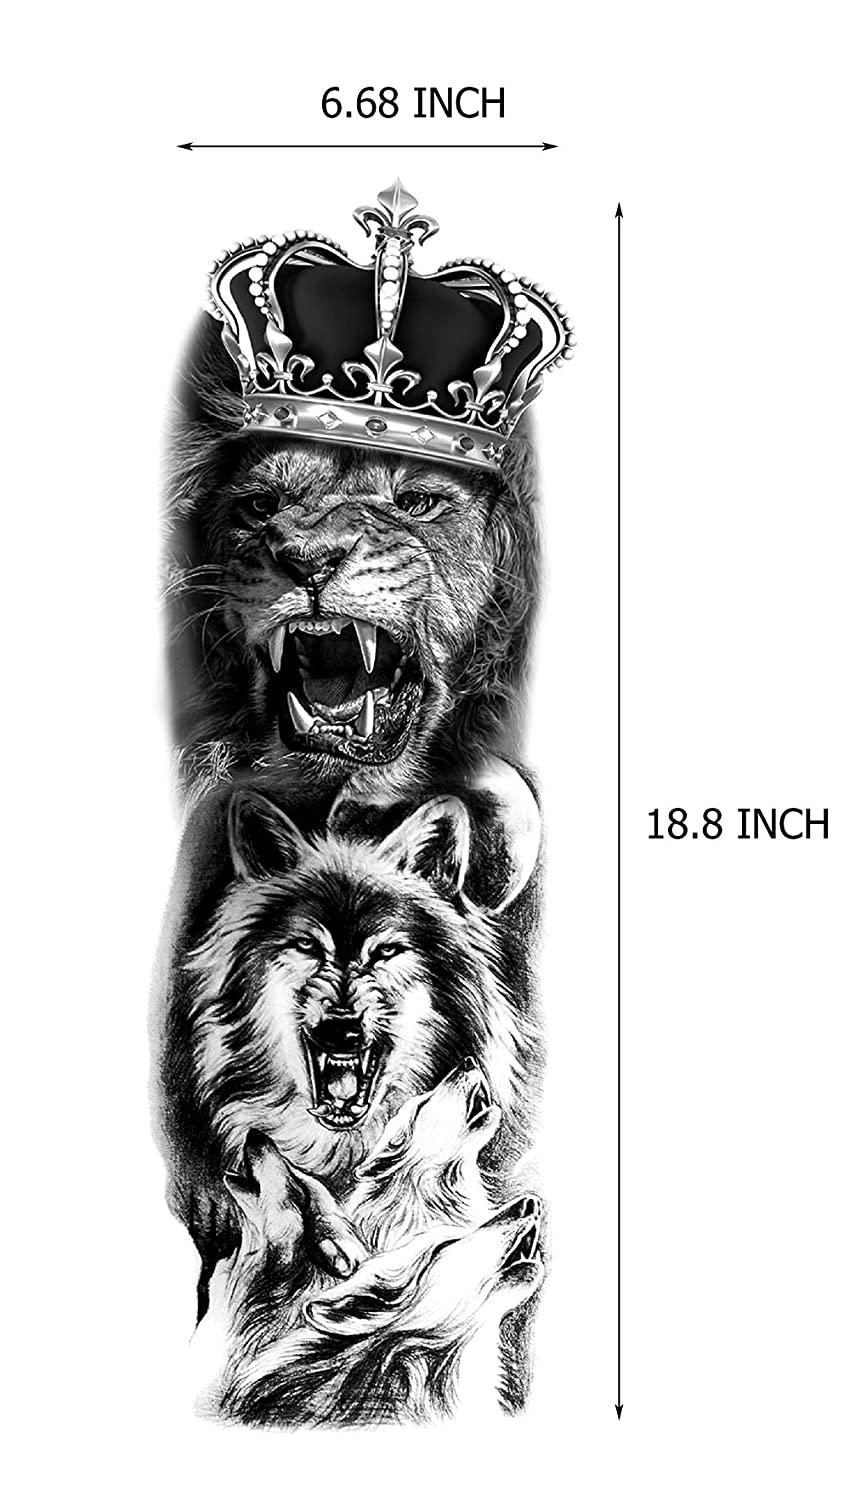 disney, lion king and disney tattoos - image #7745727 on Favim.com